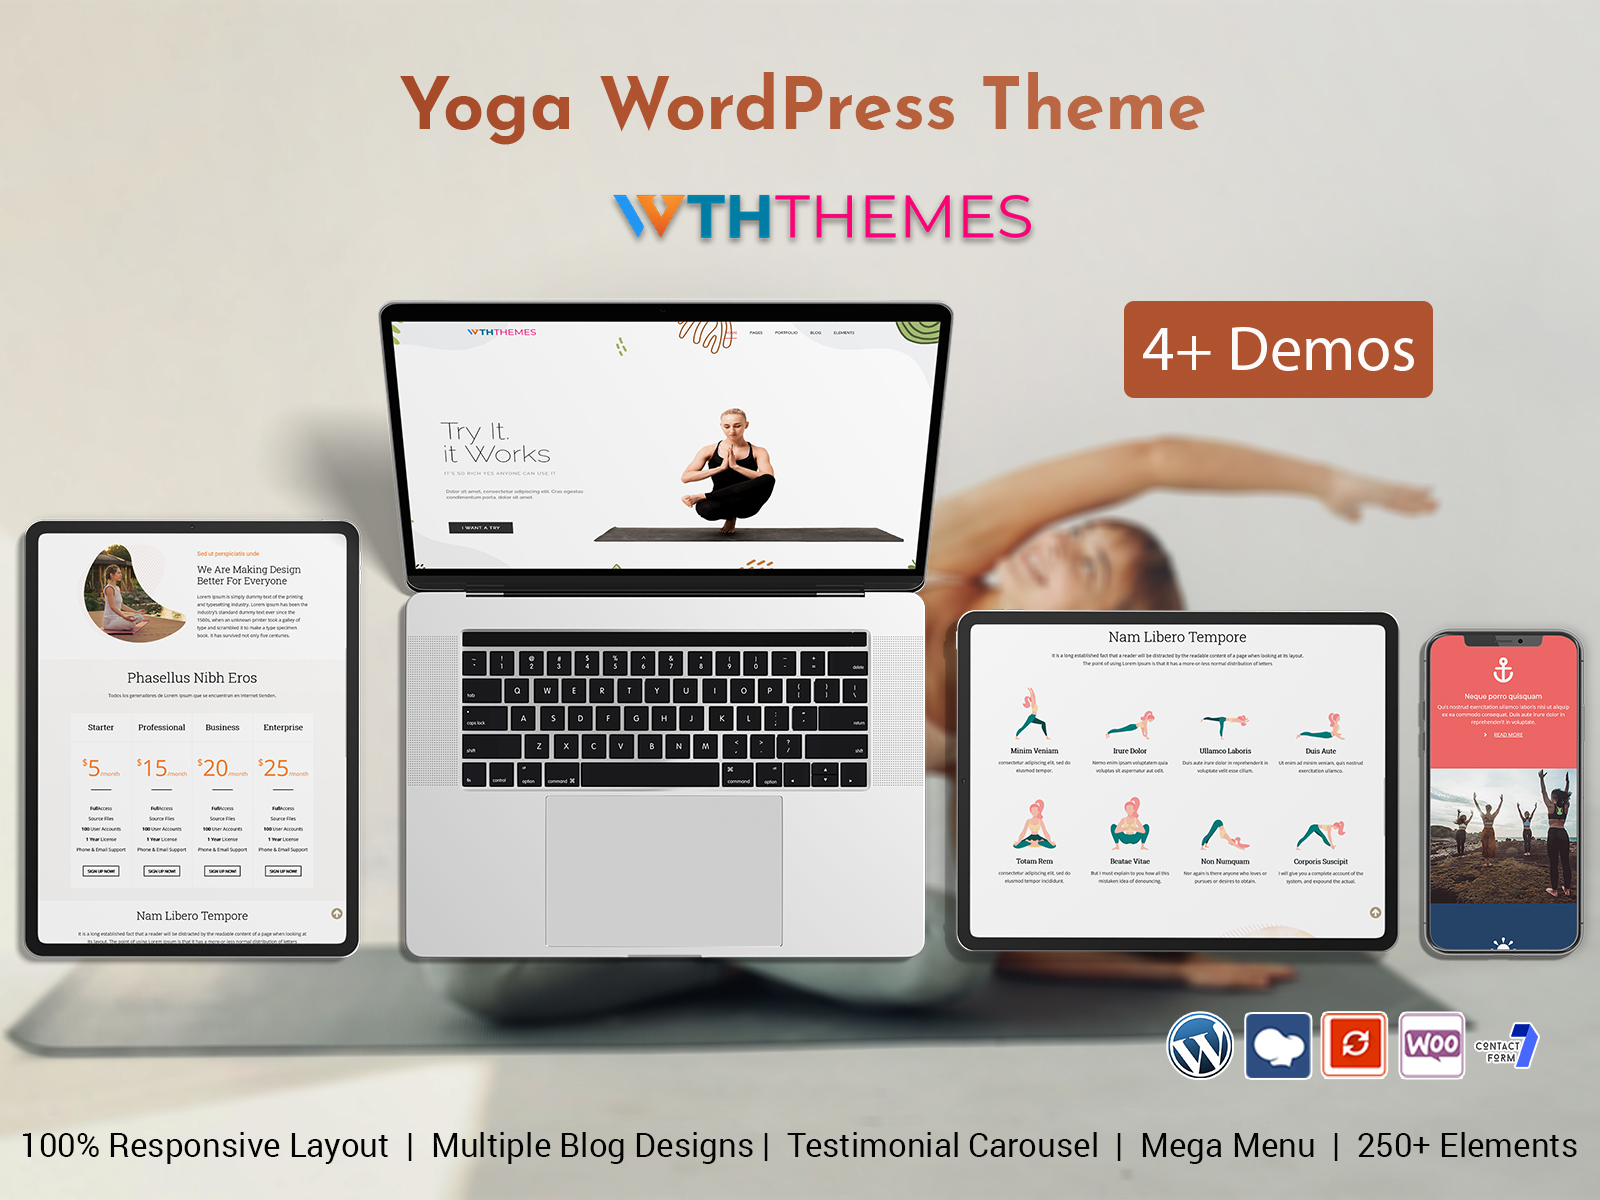 Transform Your Yoga Business With A Yoga WordPress Theme